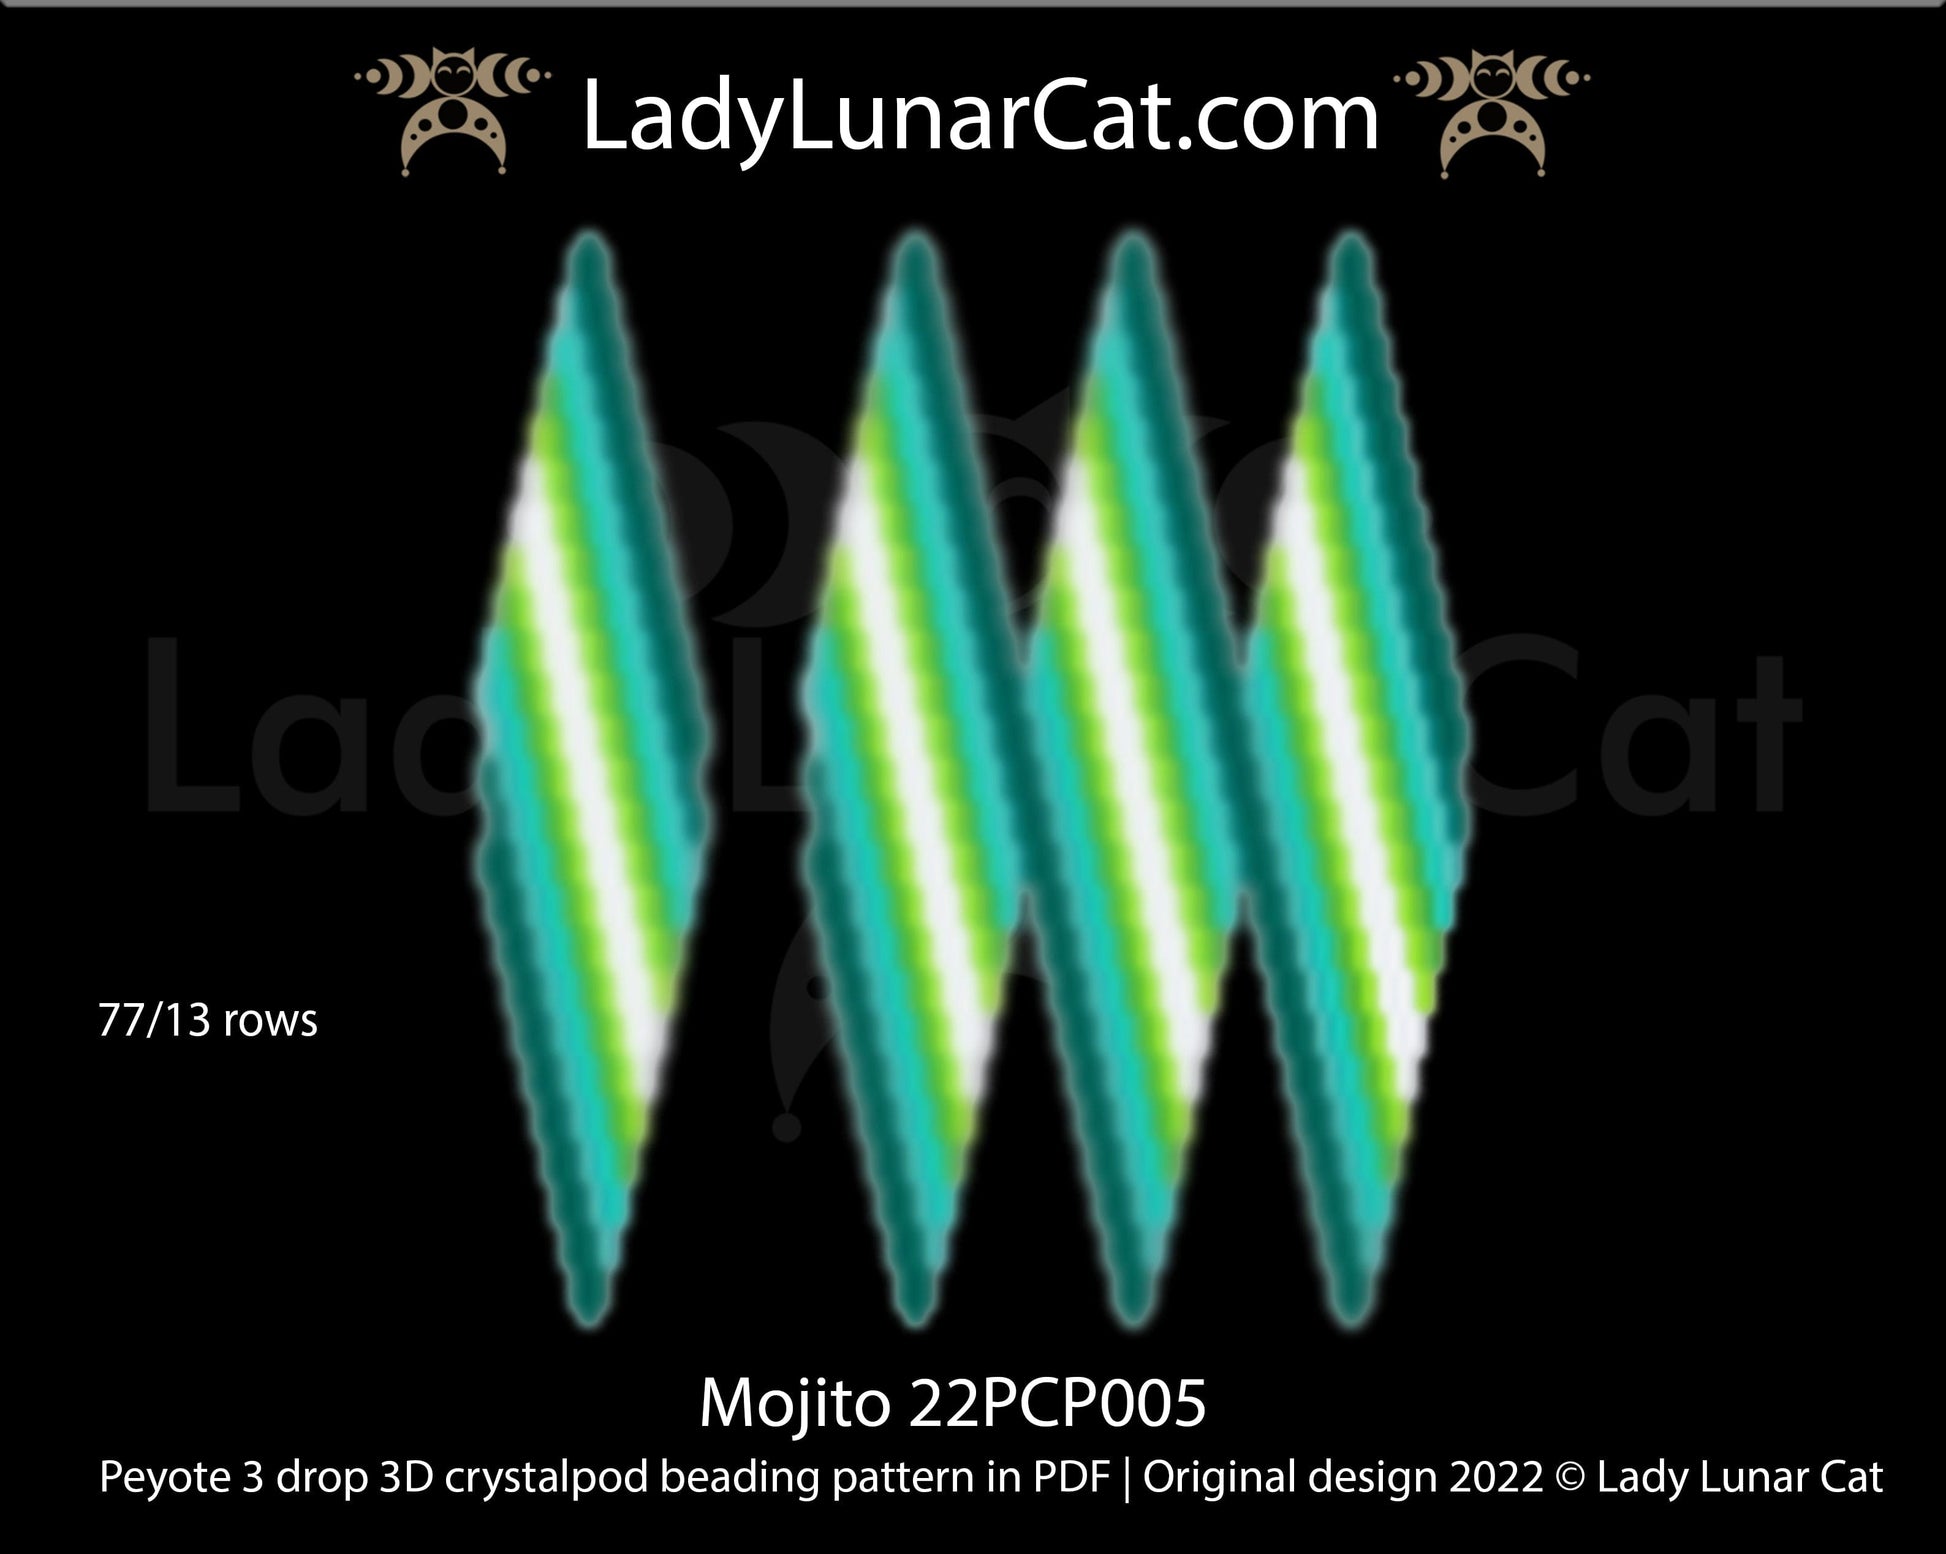 Peyote 3drop pod pattern or crystalpod pattern for beading  Mojito 22PCP005 LadyLunarCat